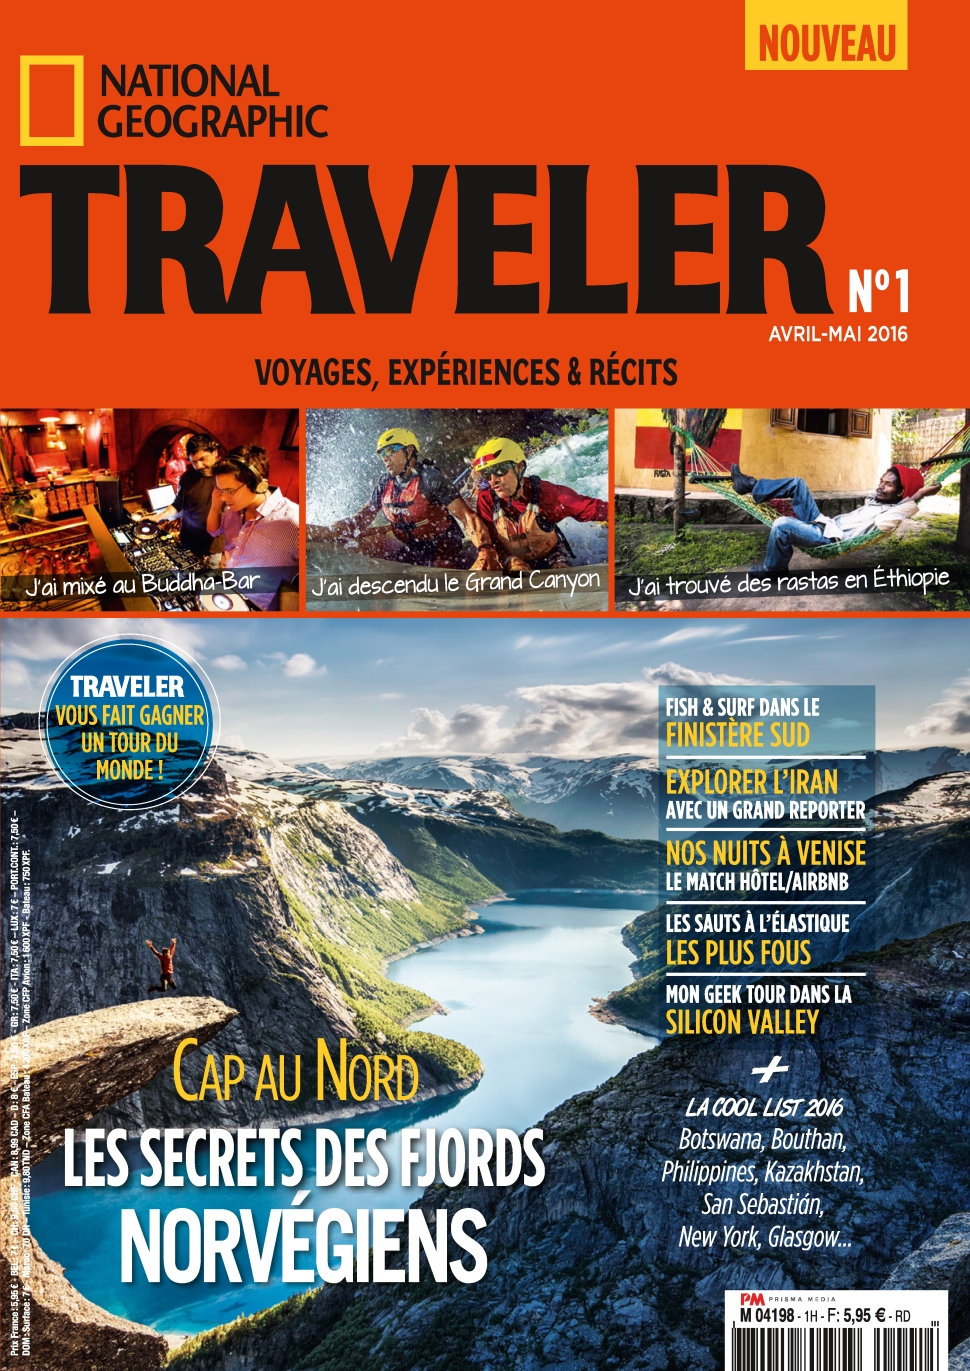 National Geographic Traveler N°1 - Avril/Mai 2016